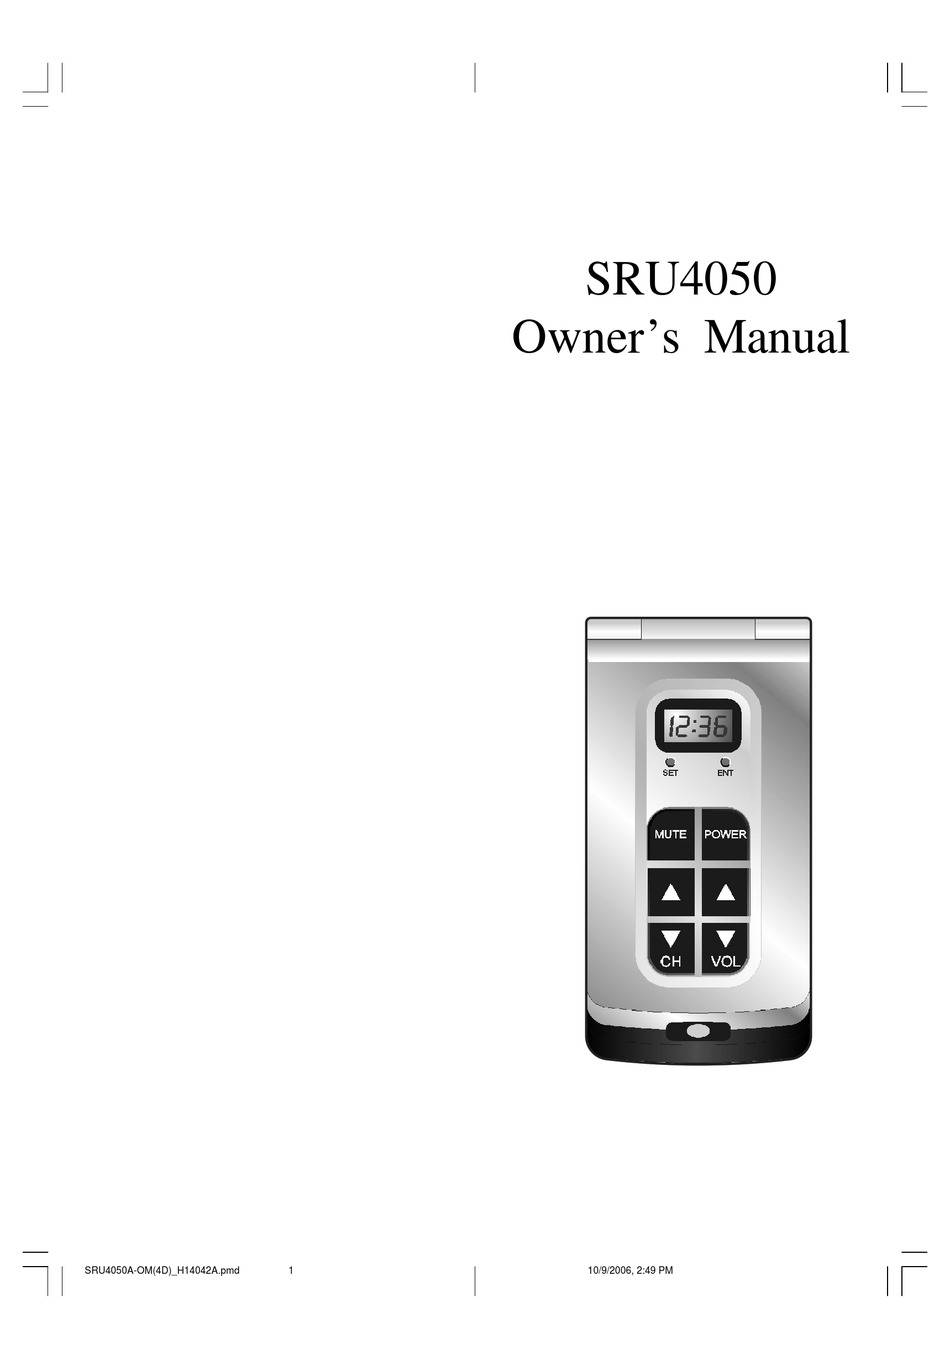 PHILIPS SRU4050 OWNER'S MANUAL Pdf Download | ManualsLib